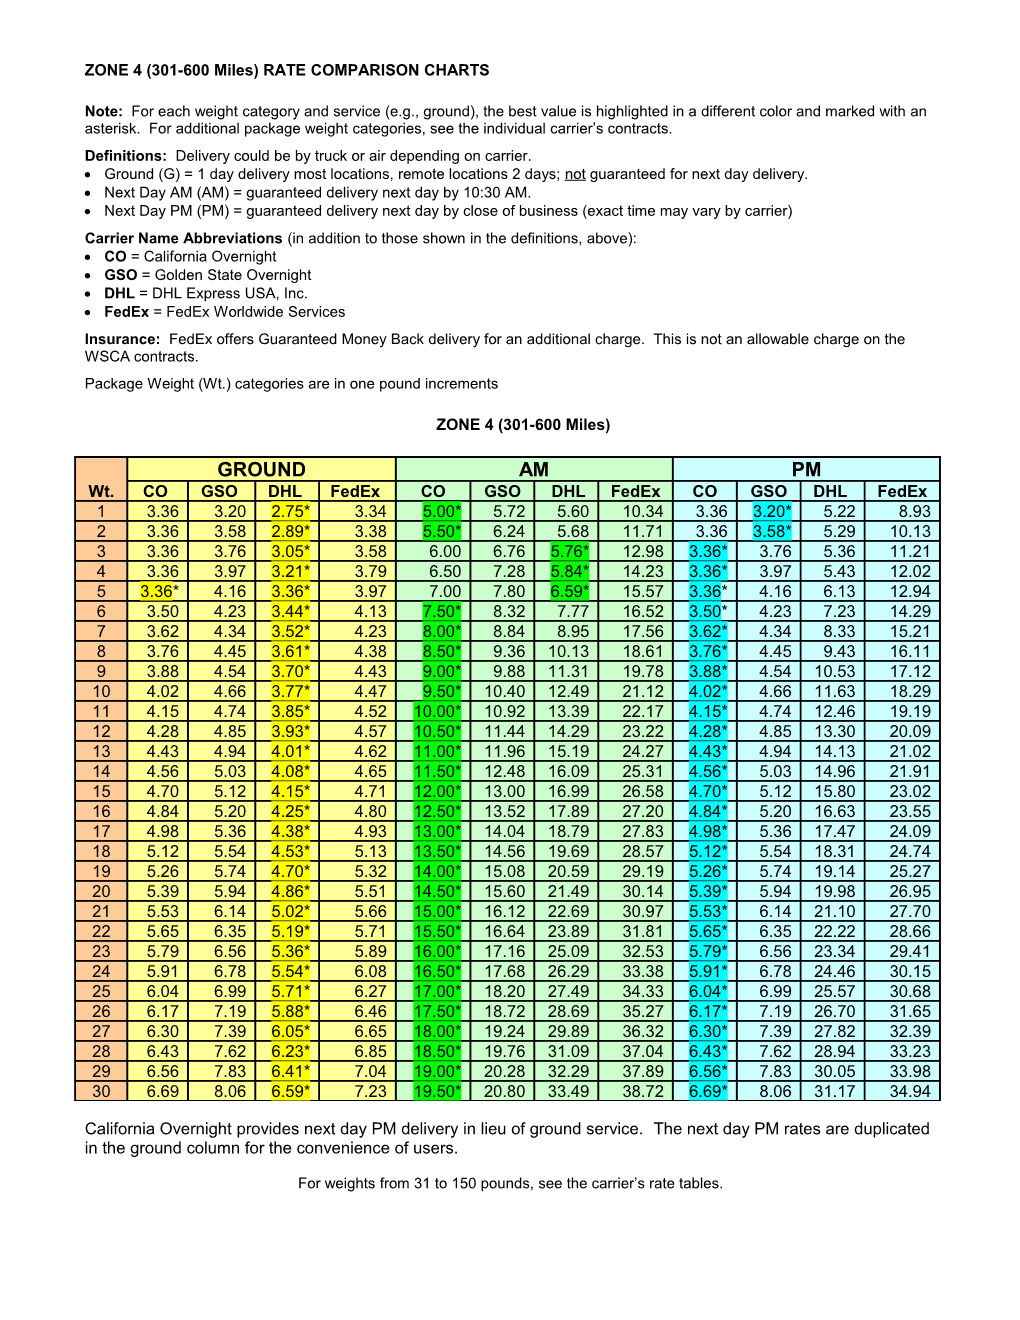 Zone 4 Rate Comparison Sampling Charts